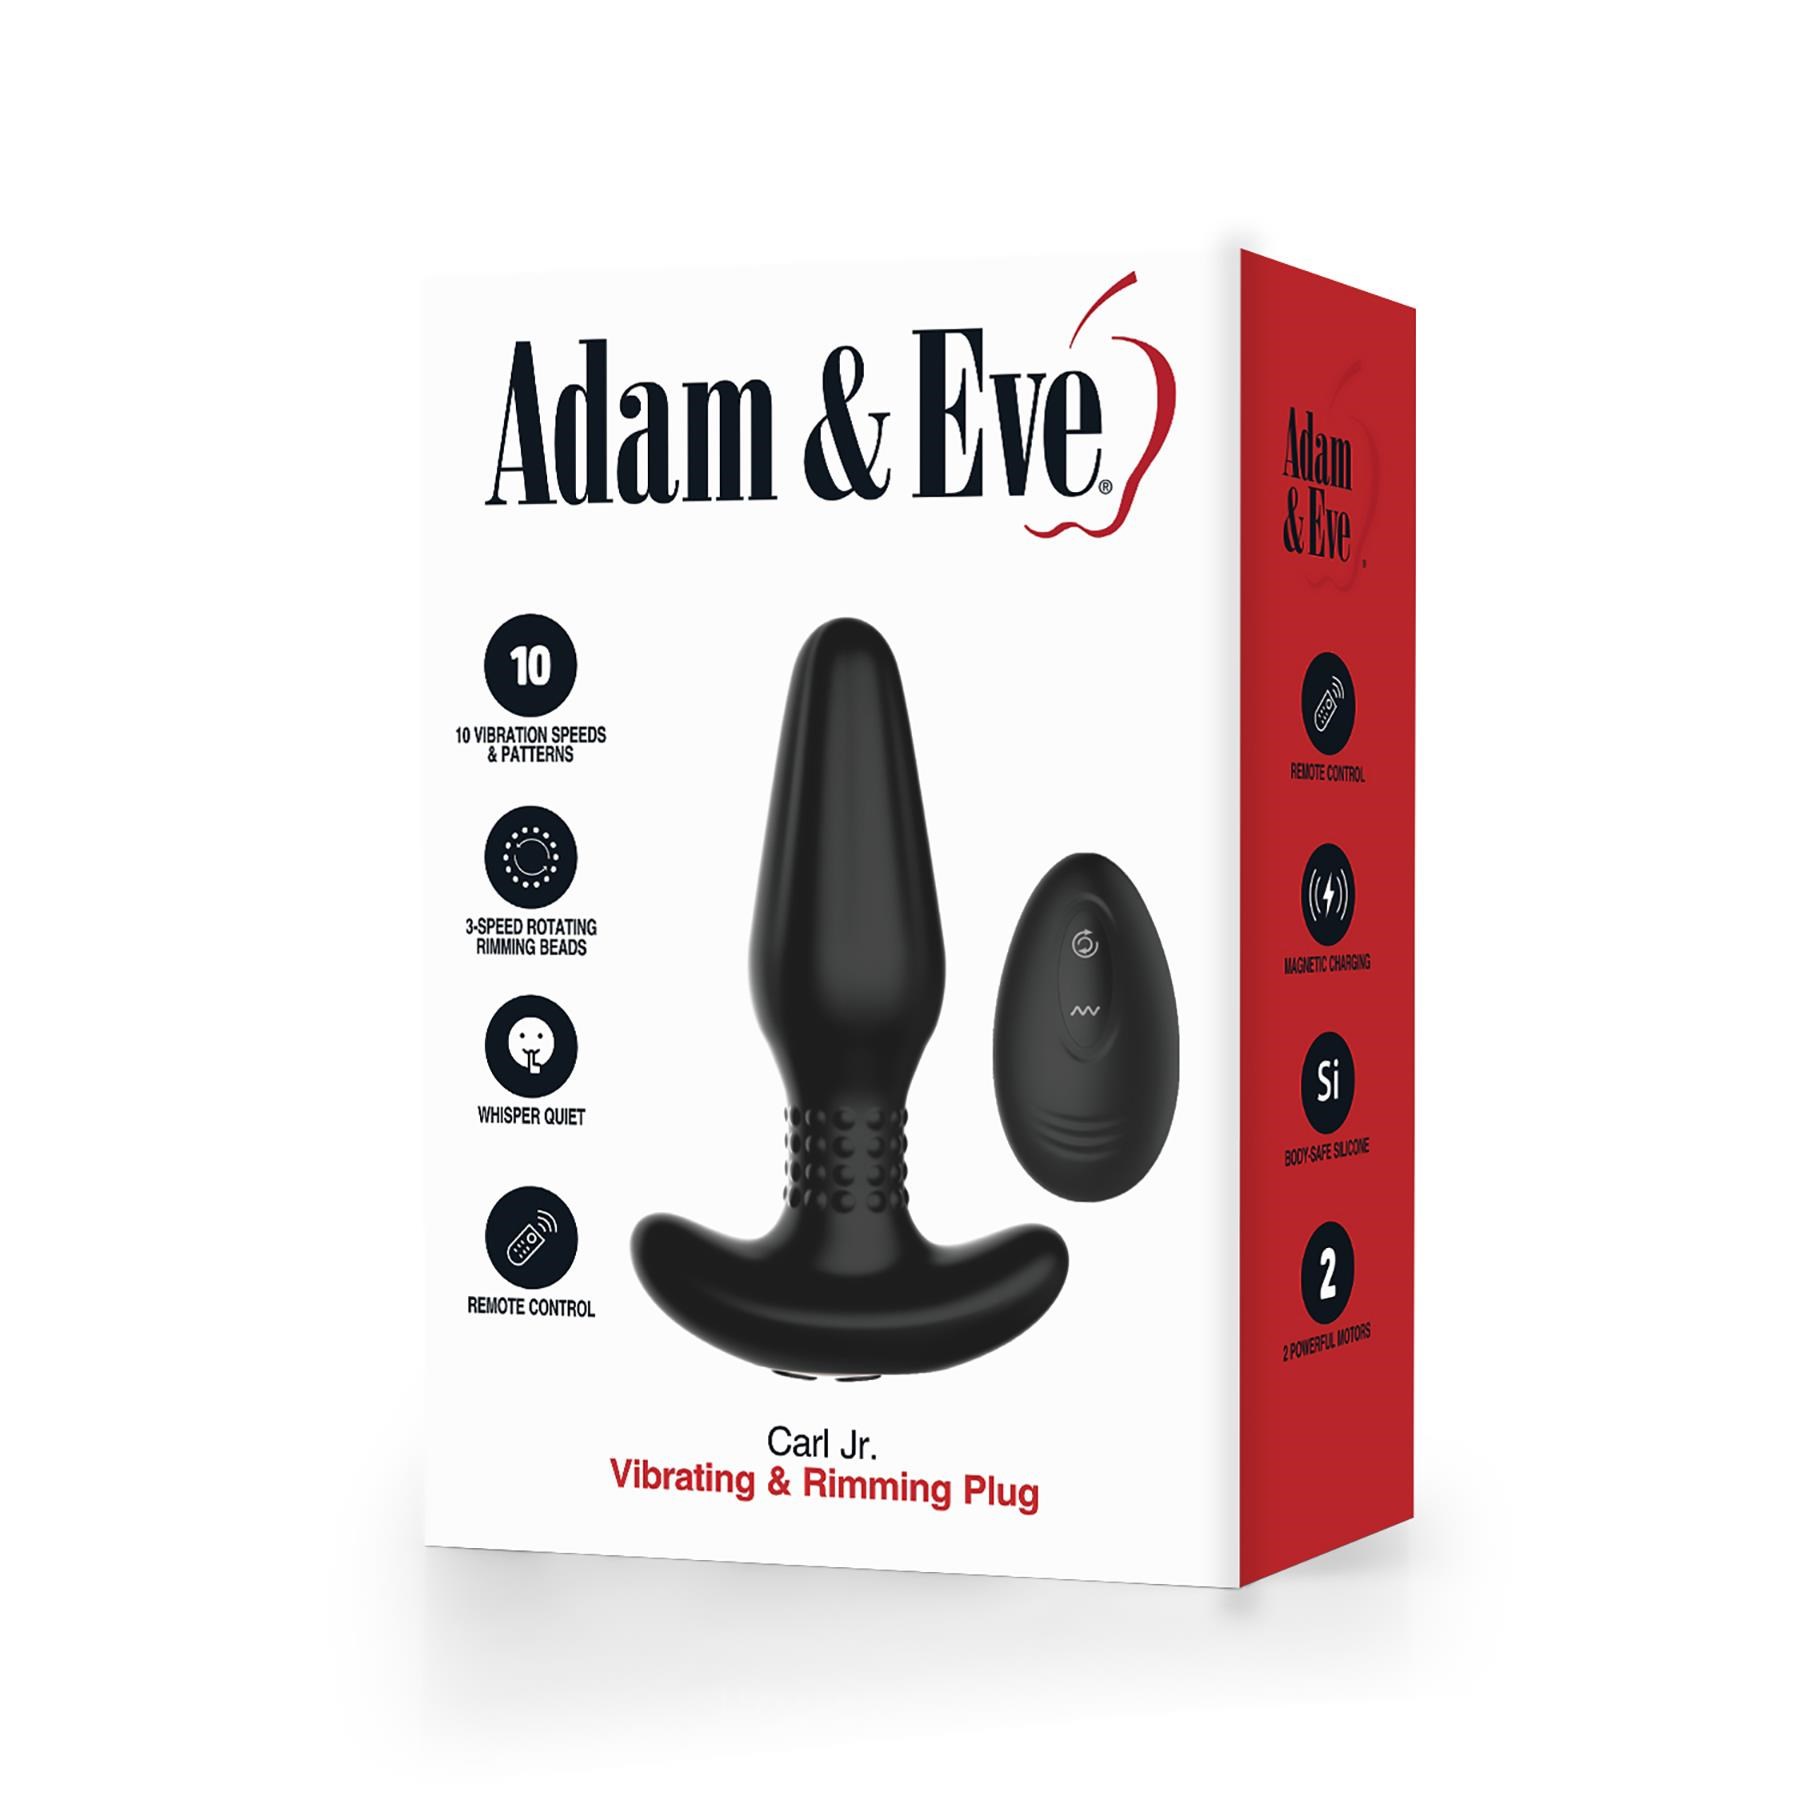 Adam and Eve Vibrating & Rimming Plug - Packaging Shot